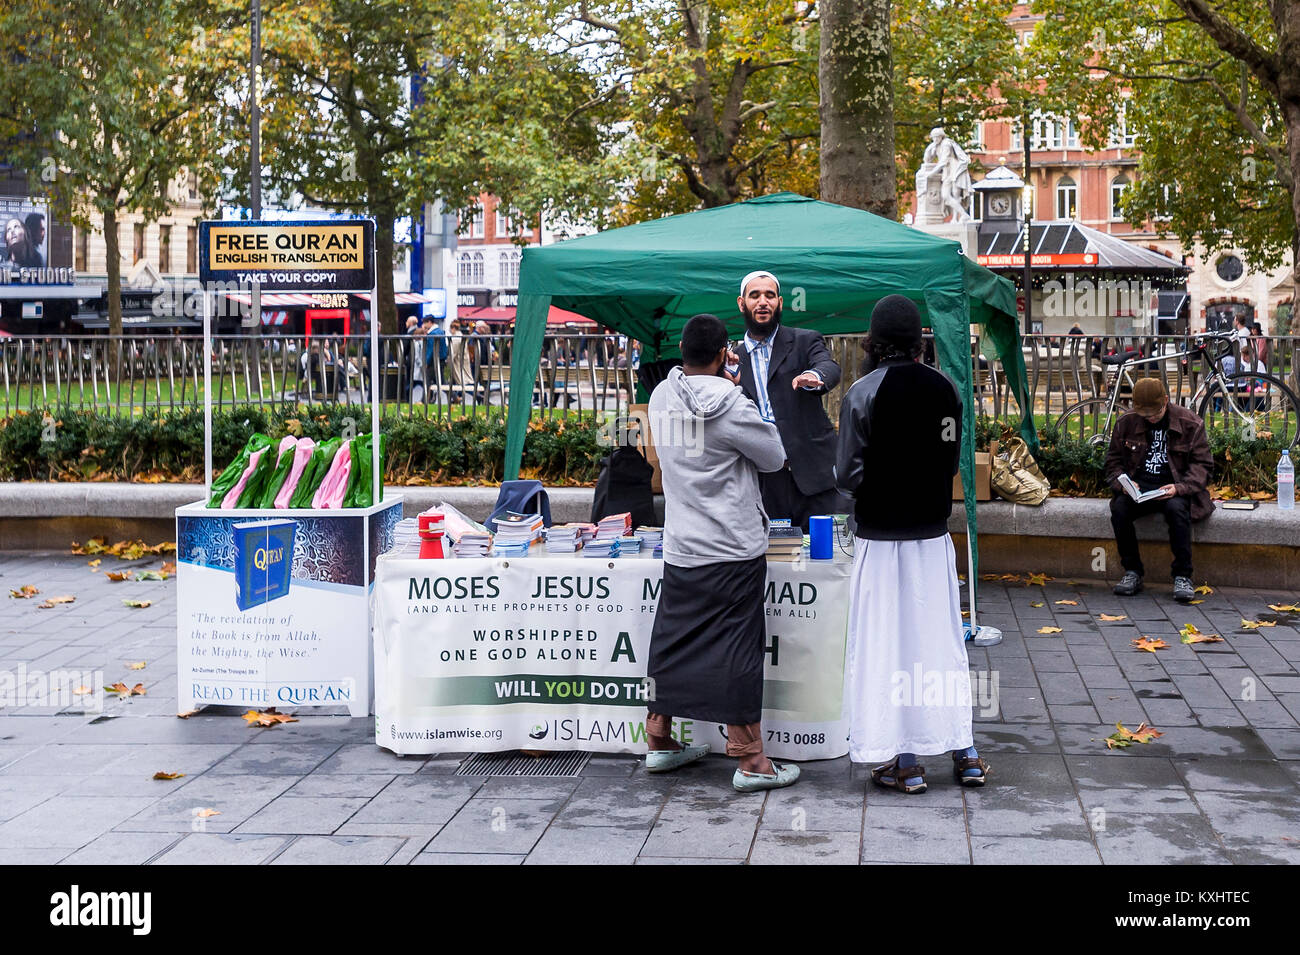 muslim offers free copy of the Koran on London street Stock Photo